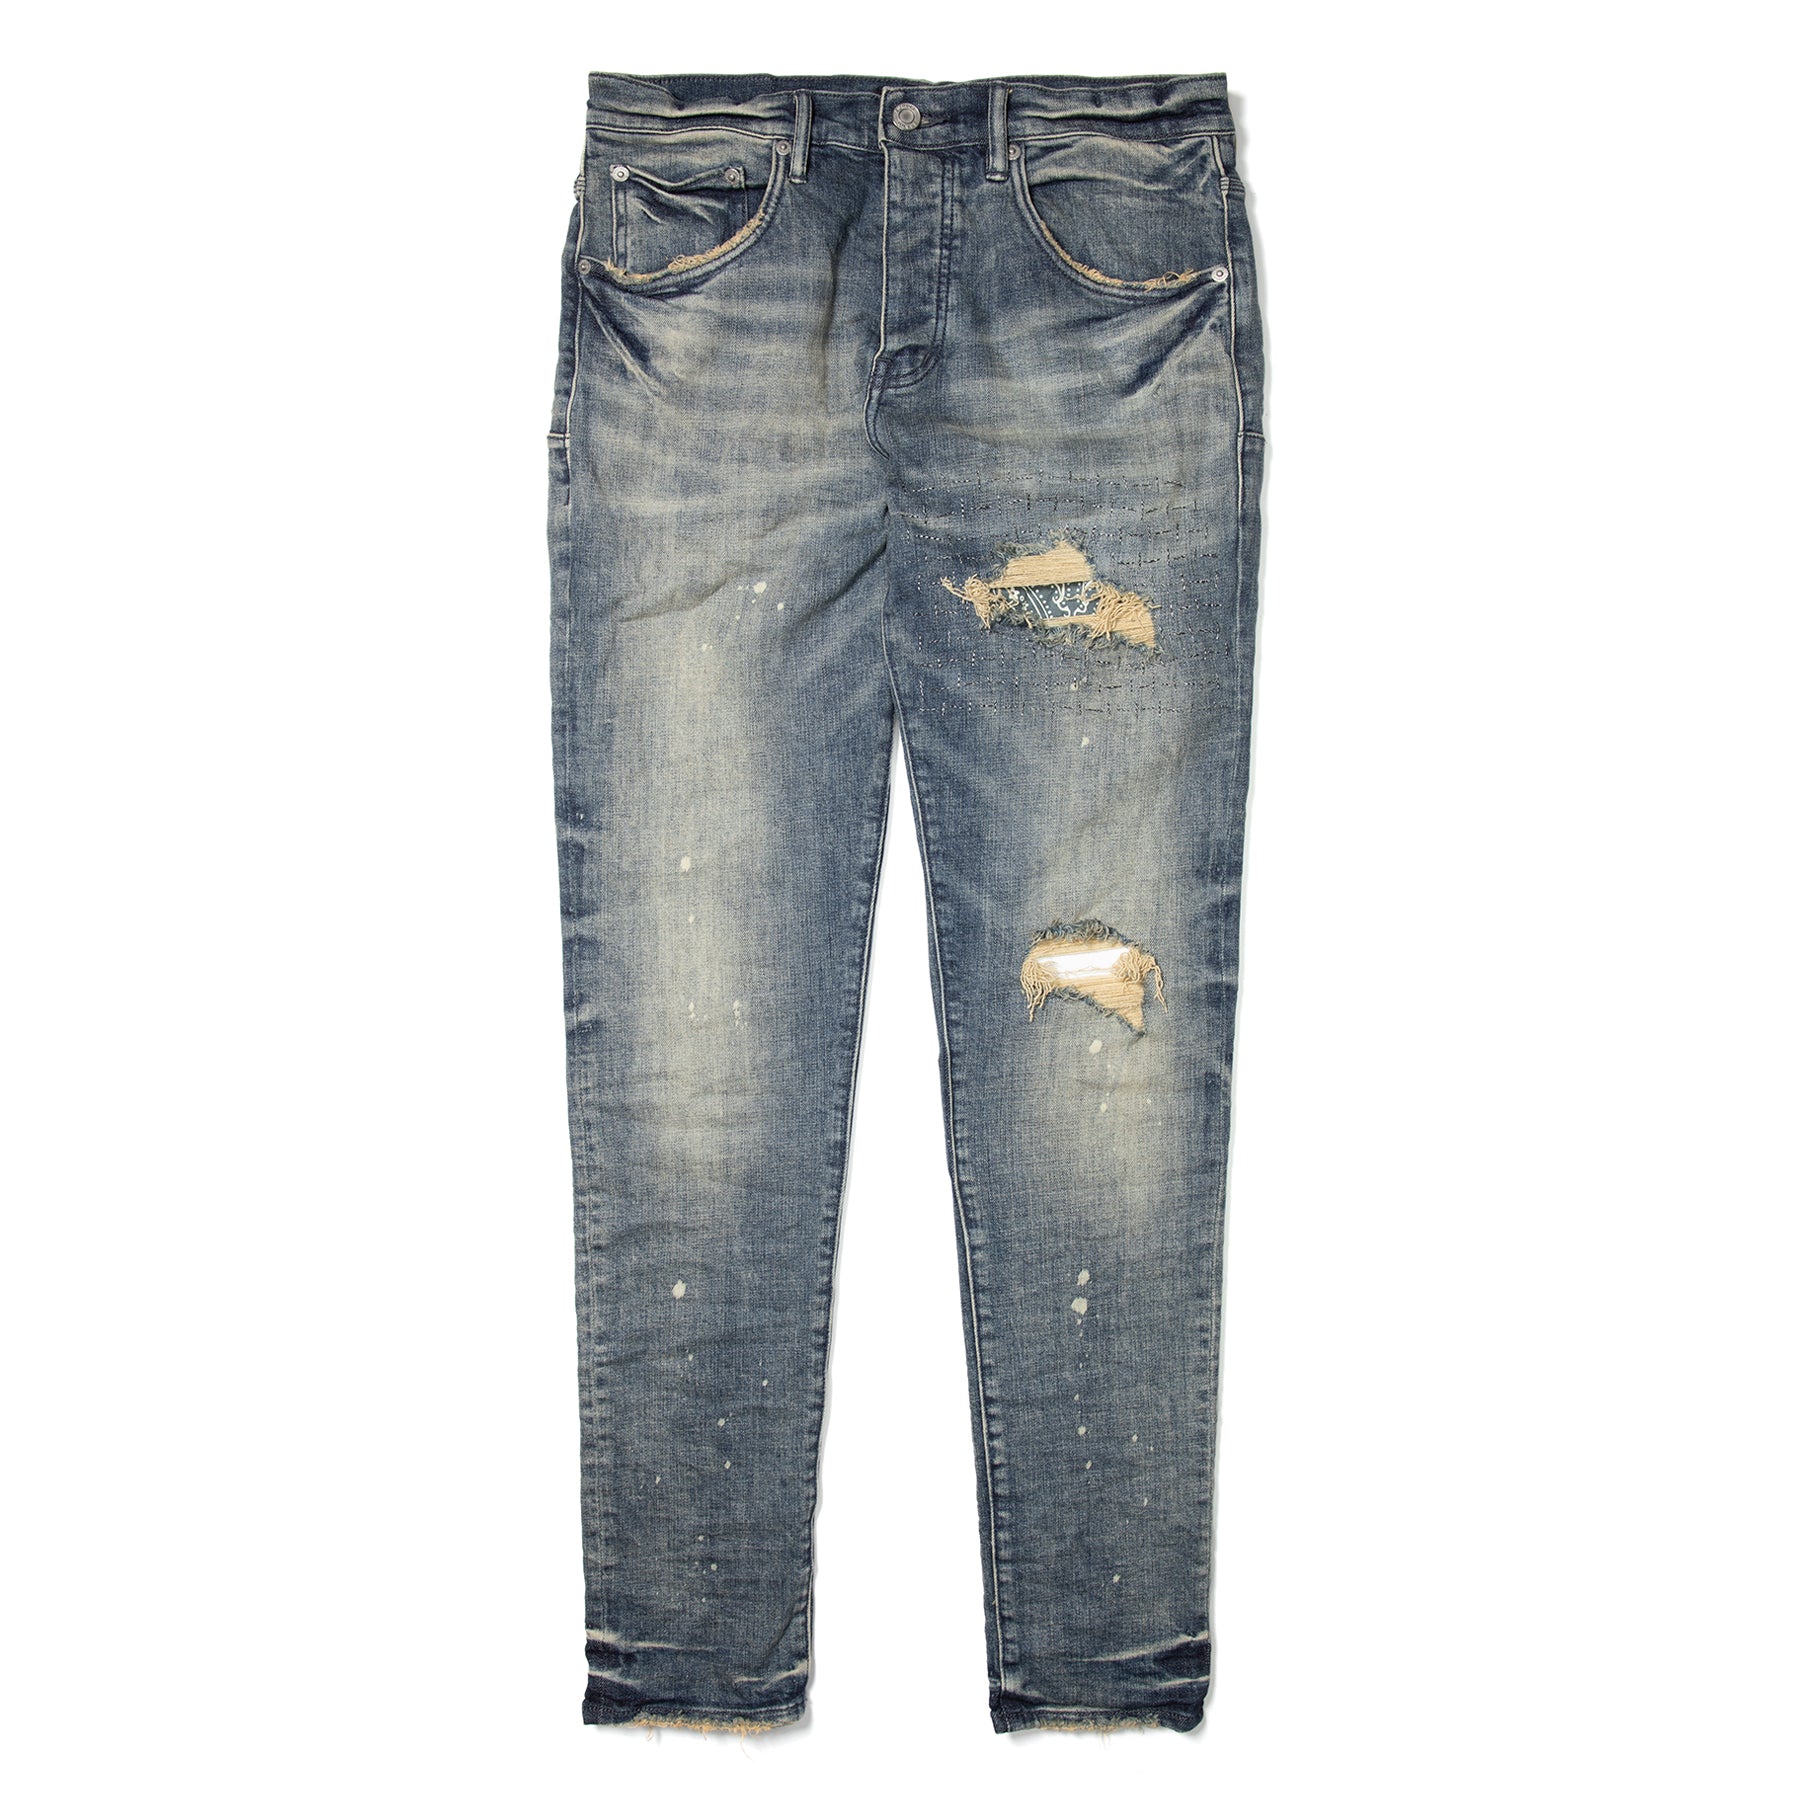 🌻 5 for 25.00 Indigo brand new jeans